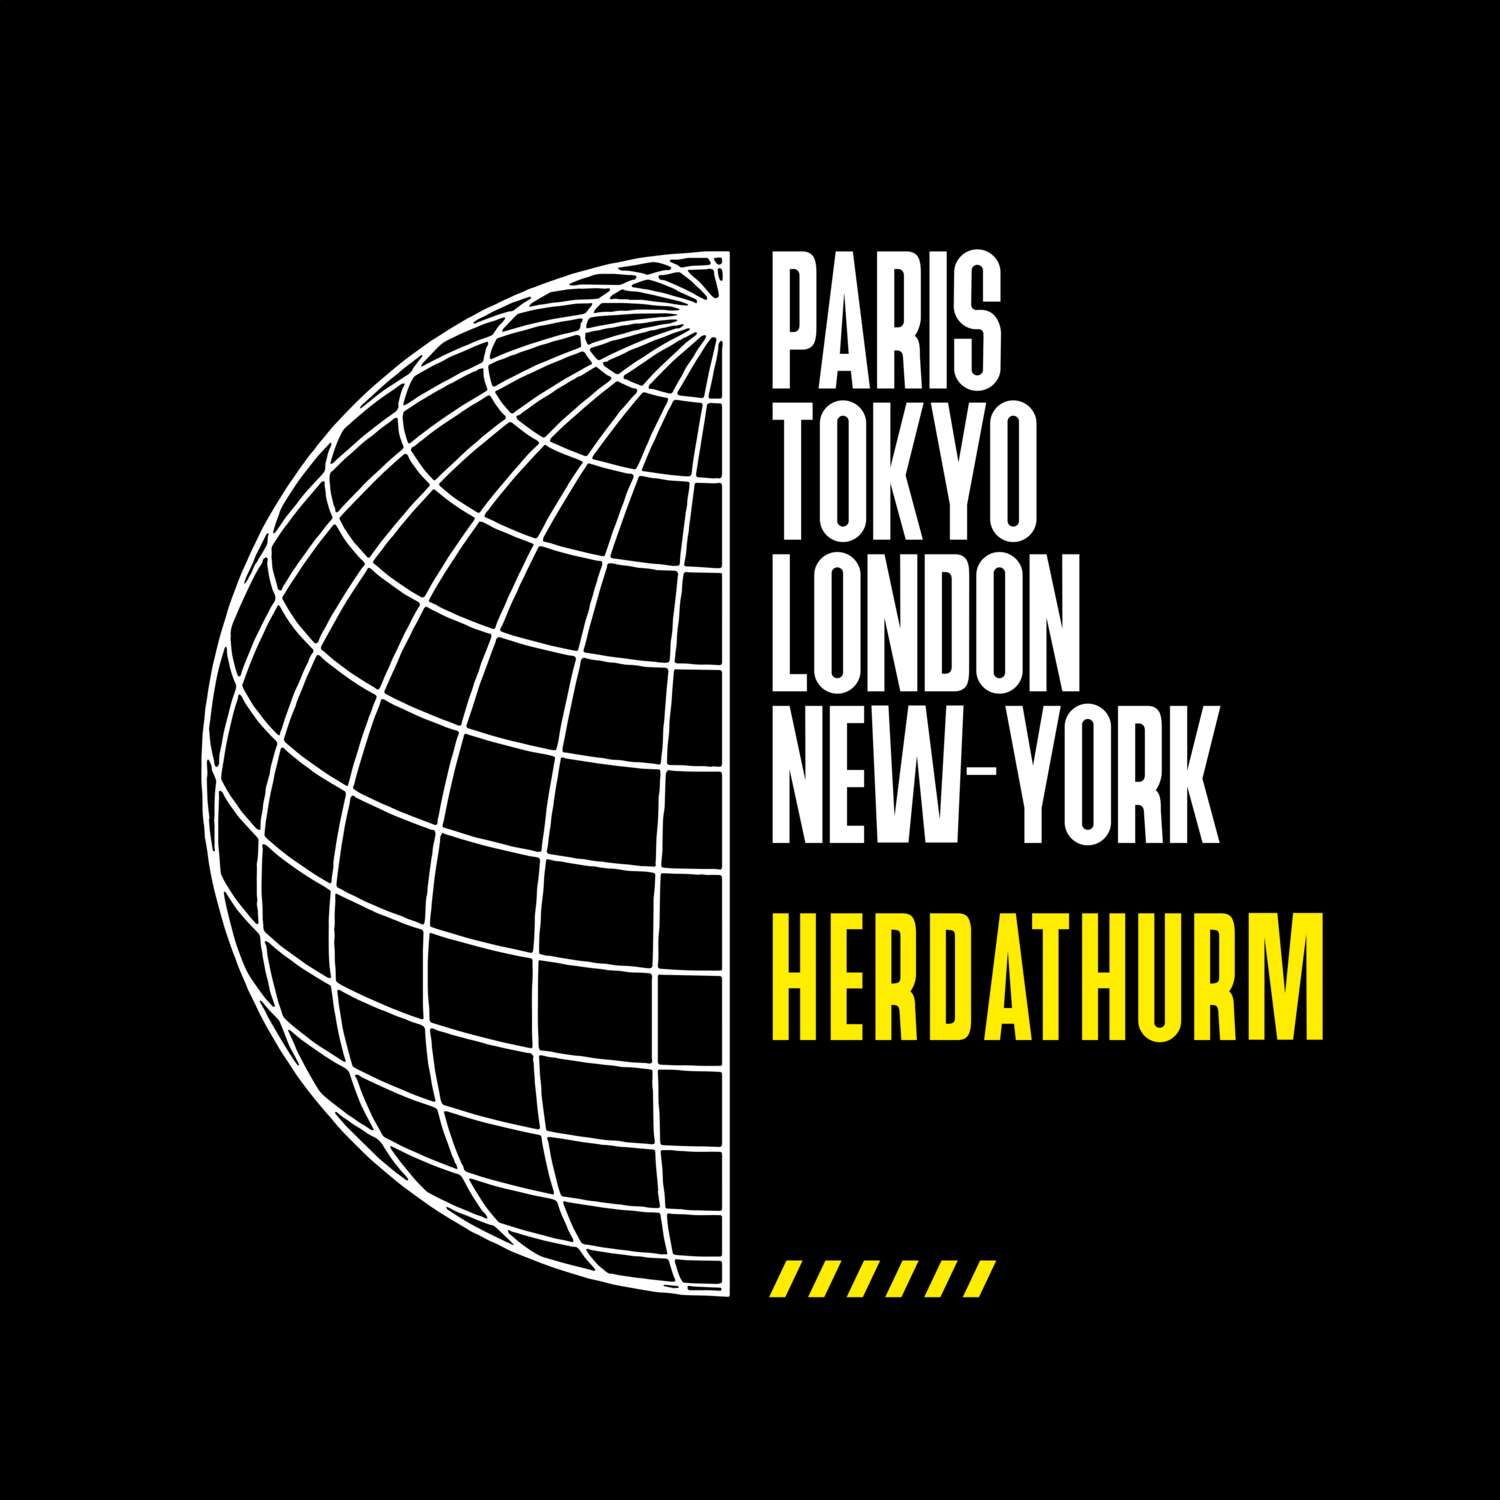 Herdathurm T-Shirt »Paris Tokyo London«